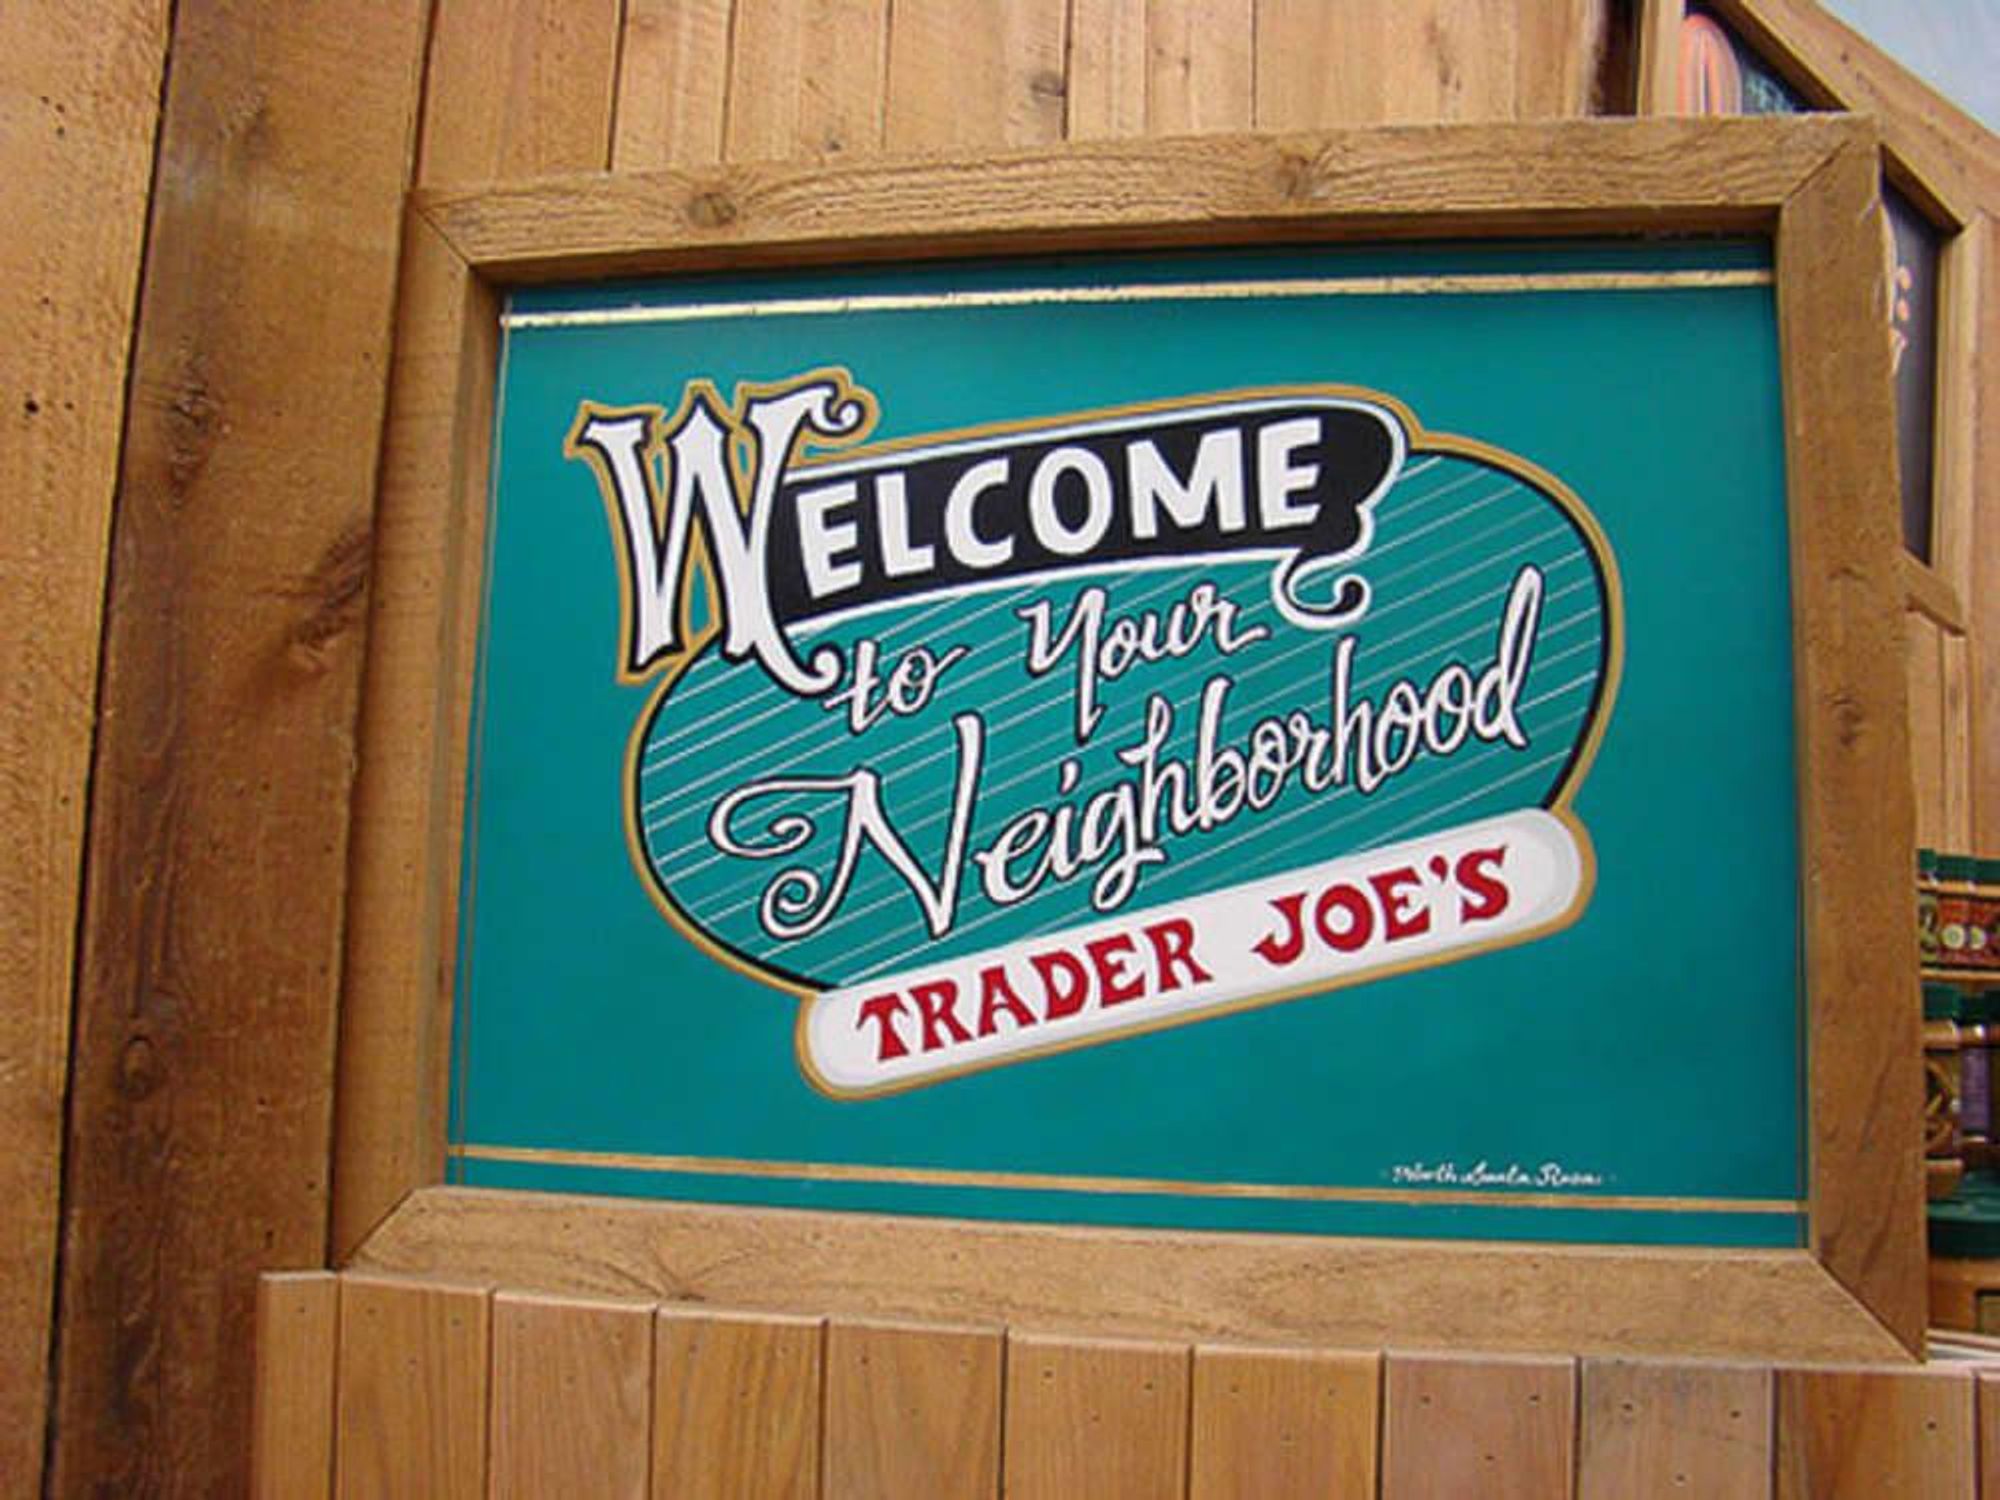 News_Trader Joe's_grocery store